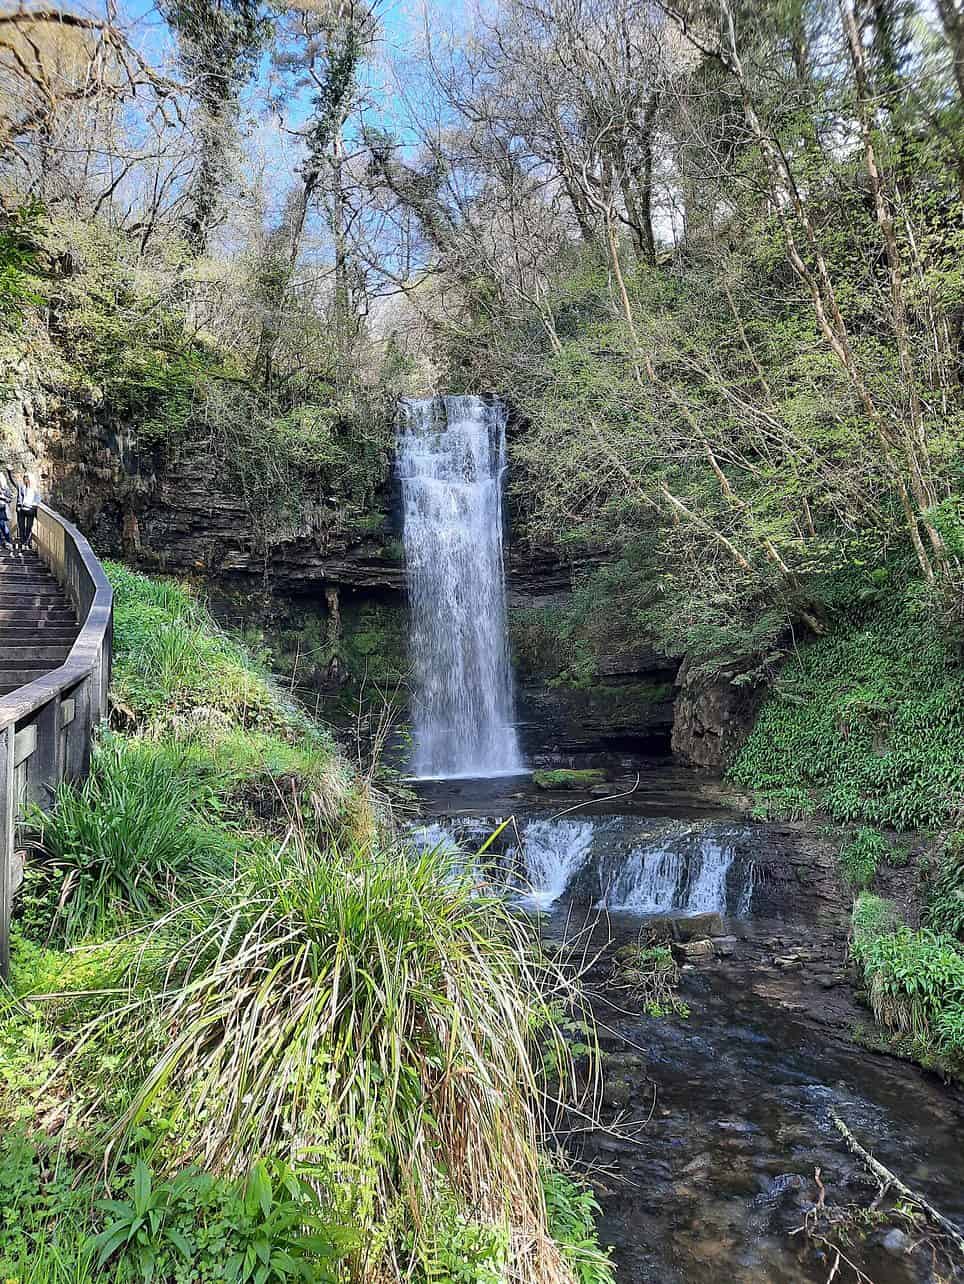 Glencar waterfall in Ireland